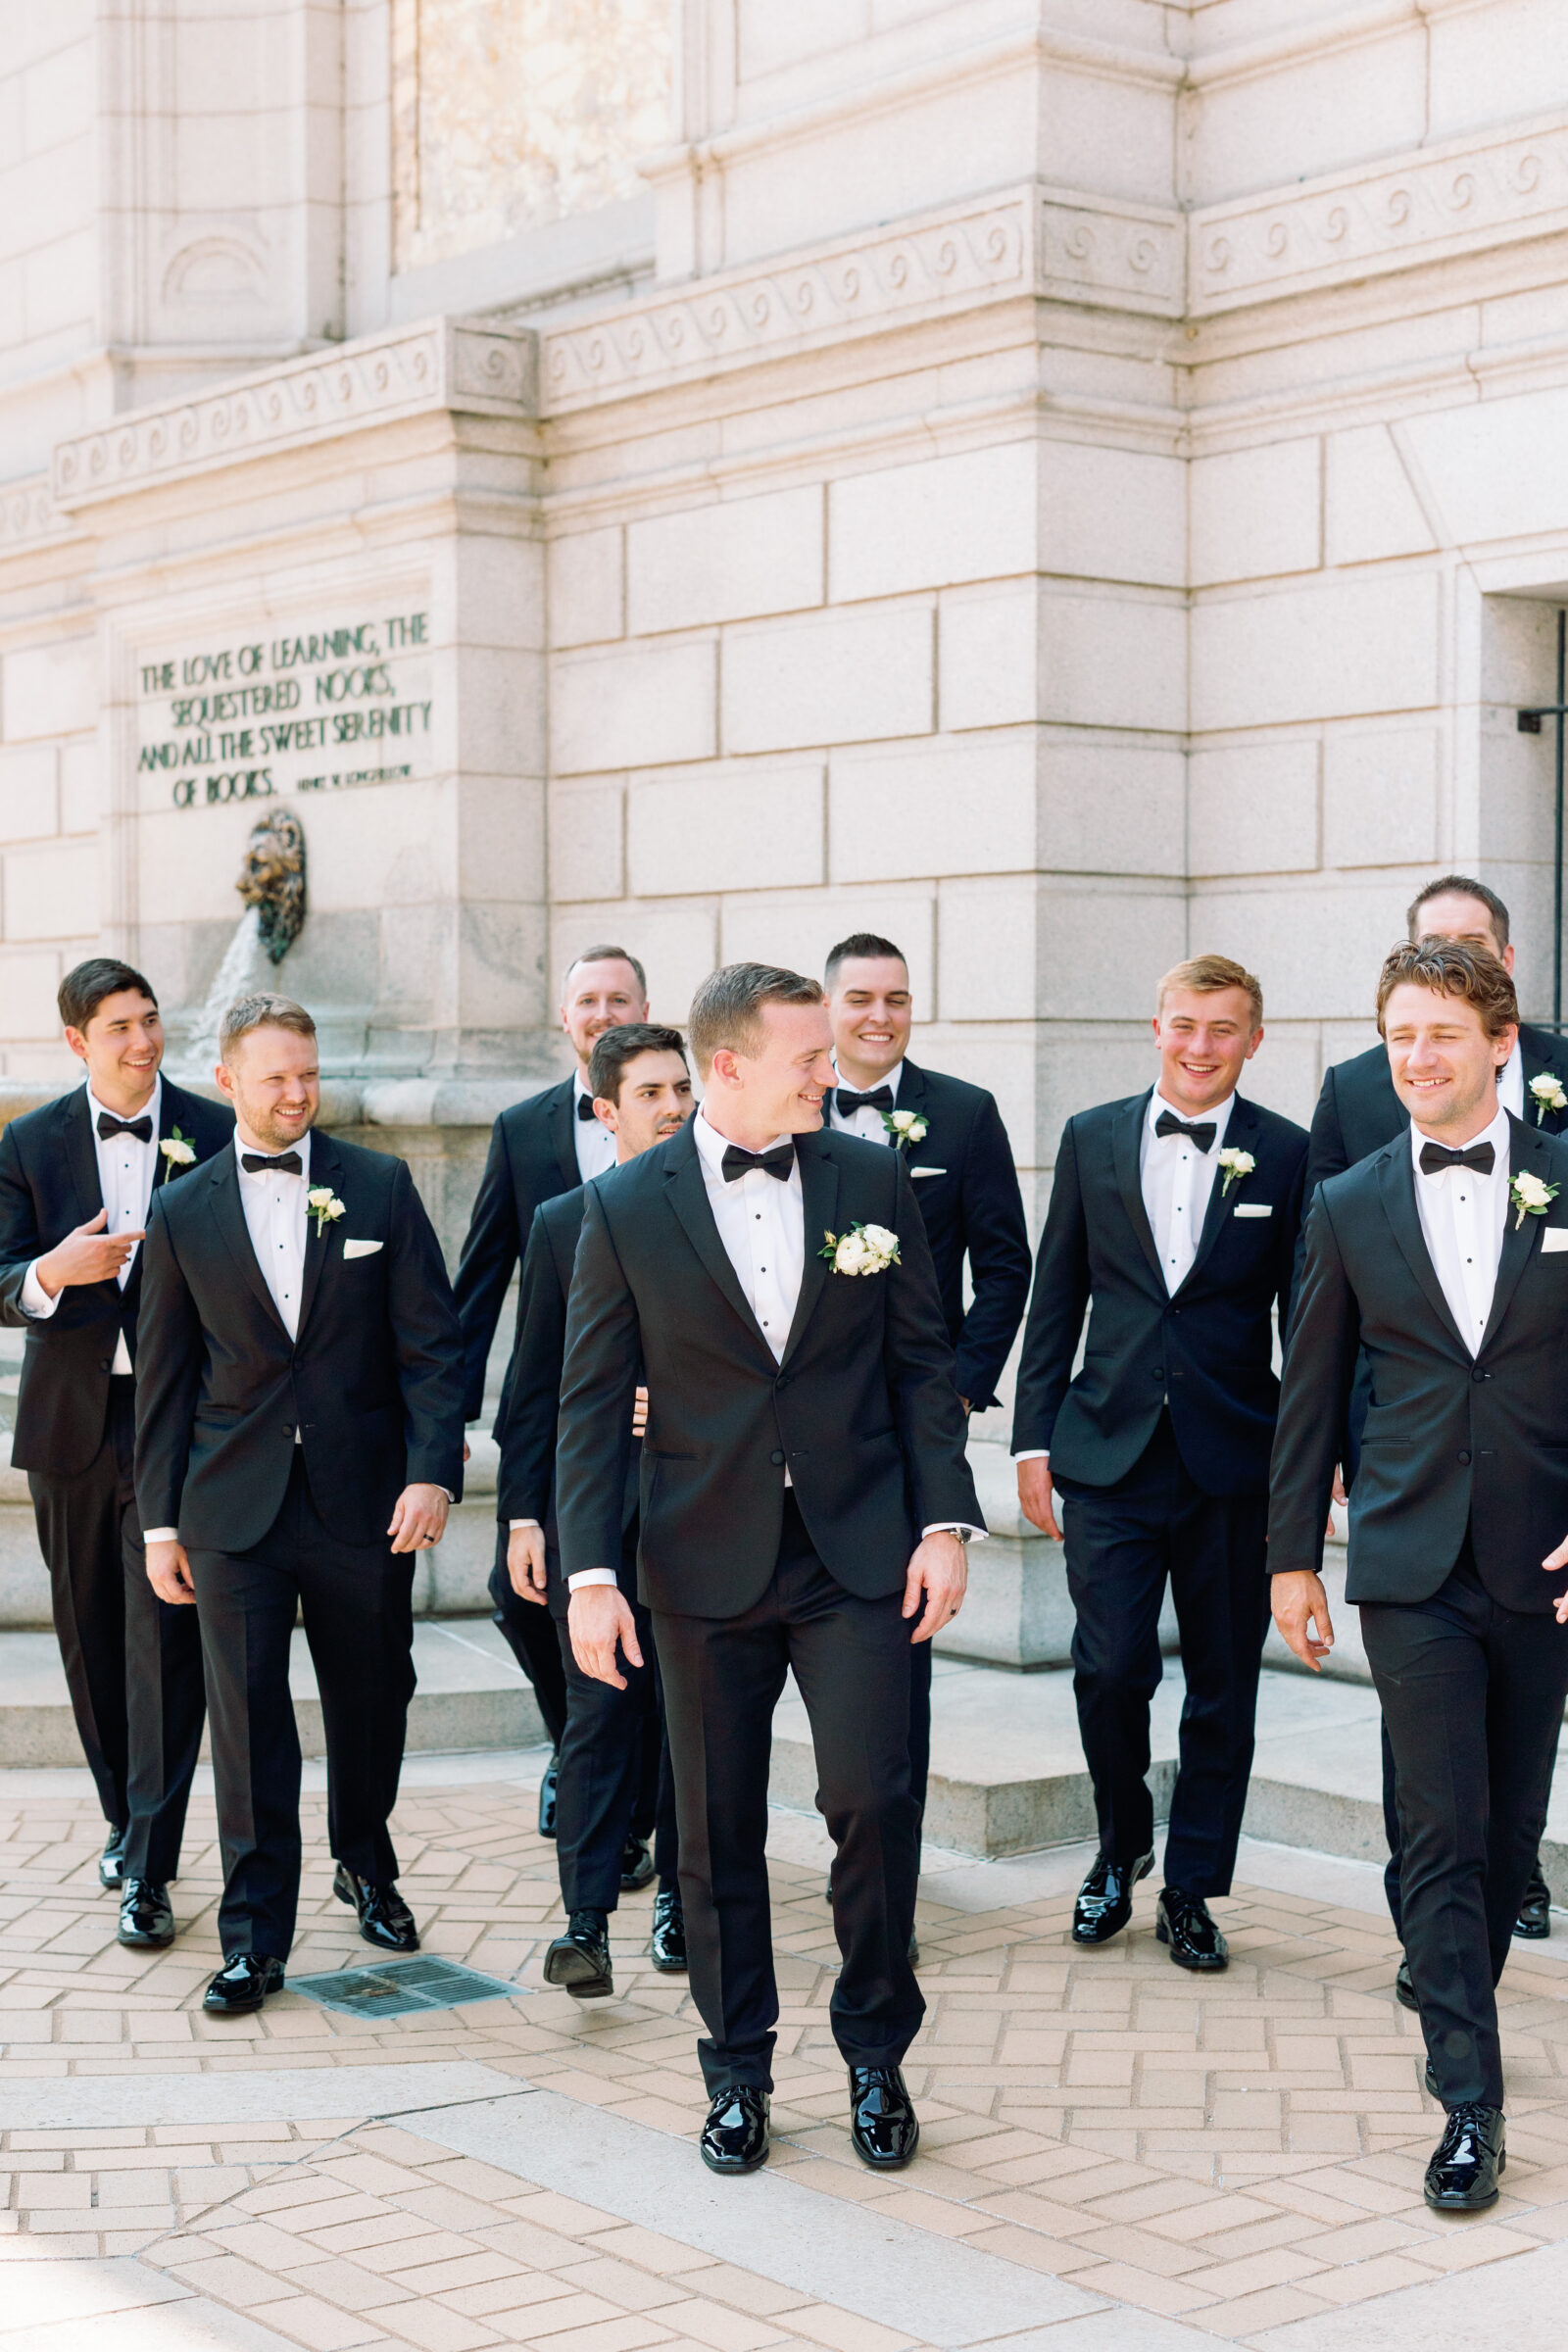 Marriott St Louis Grand Wedding Day groomsmen photos